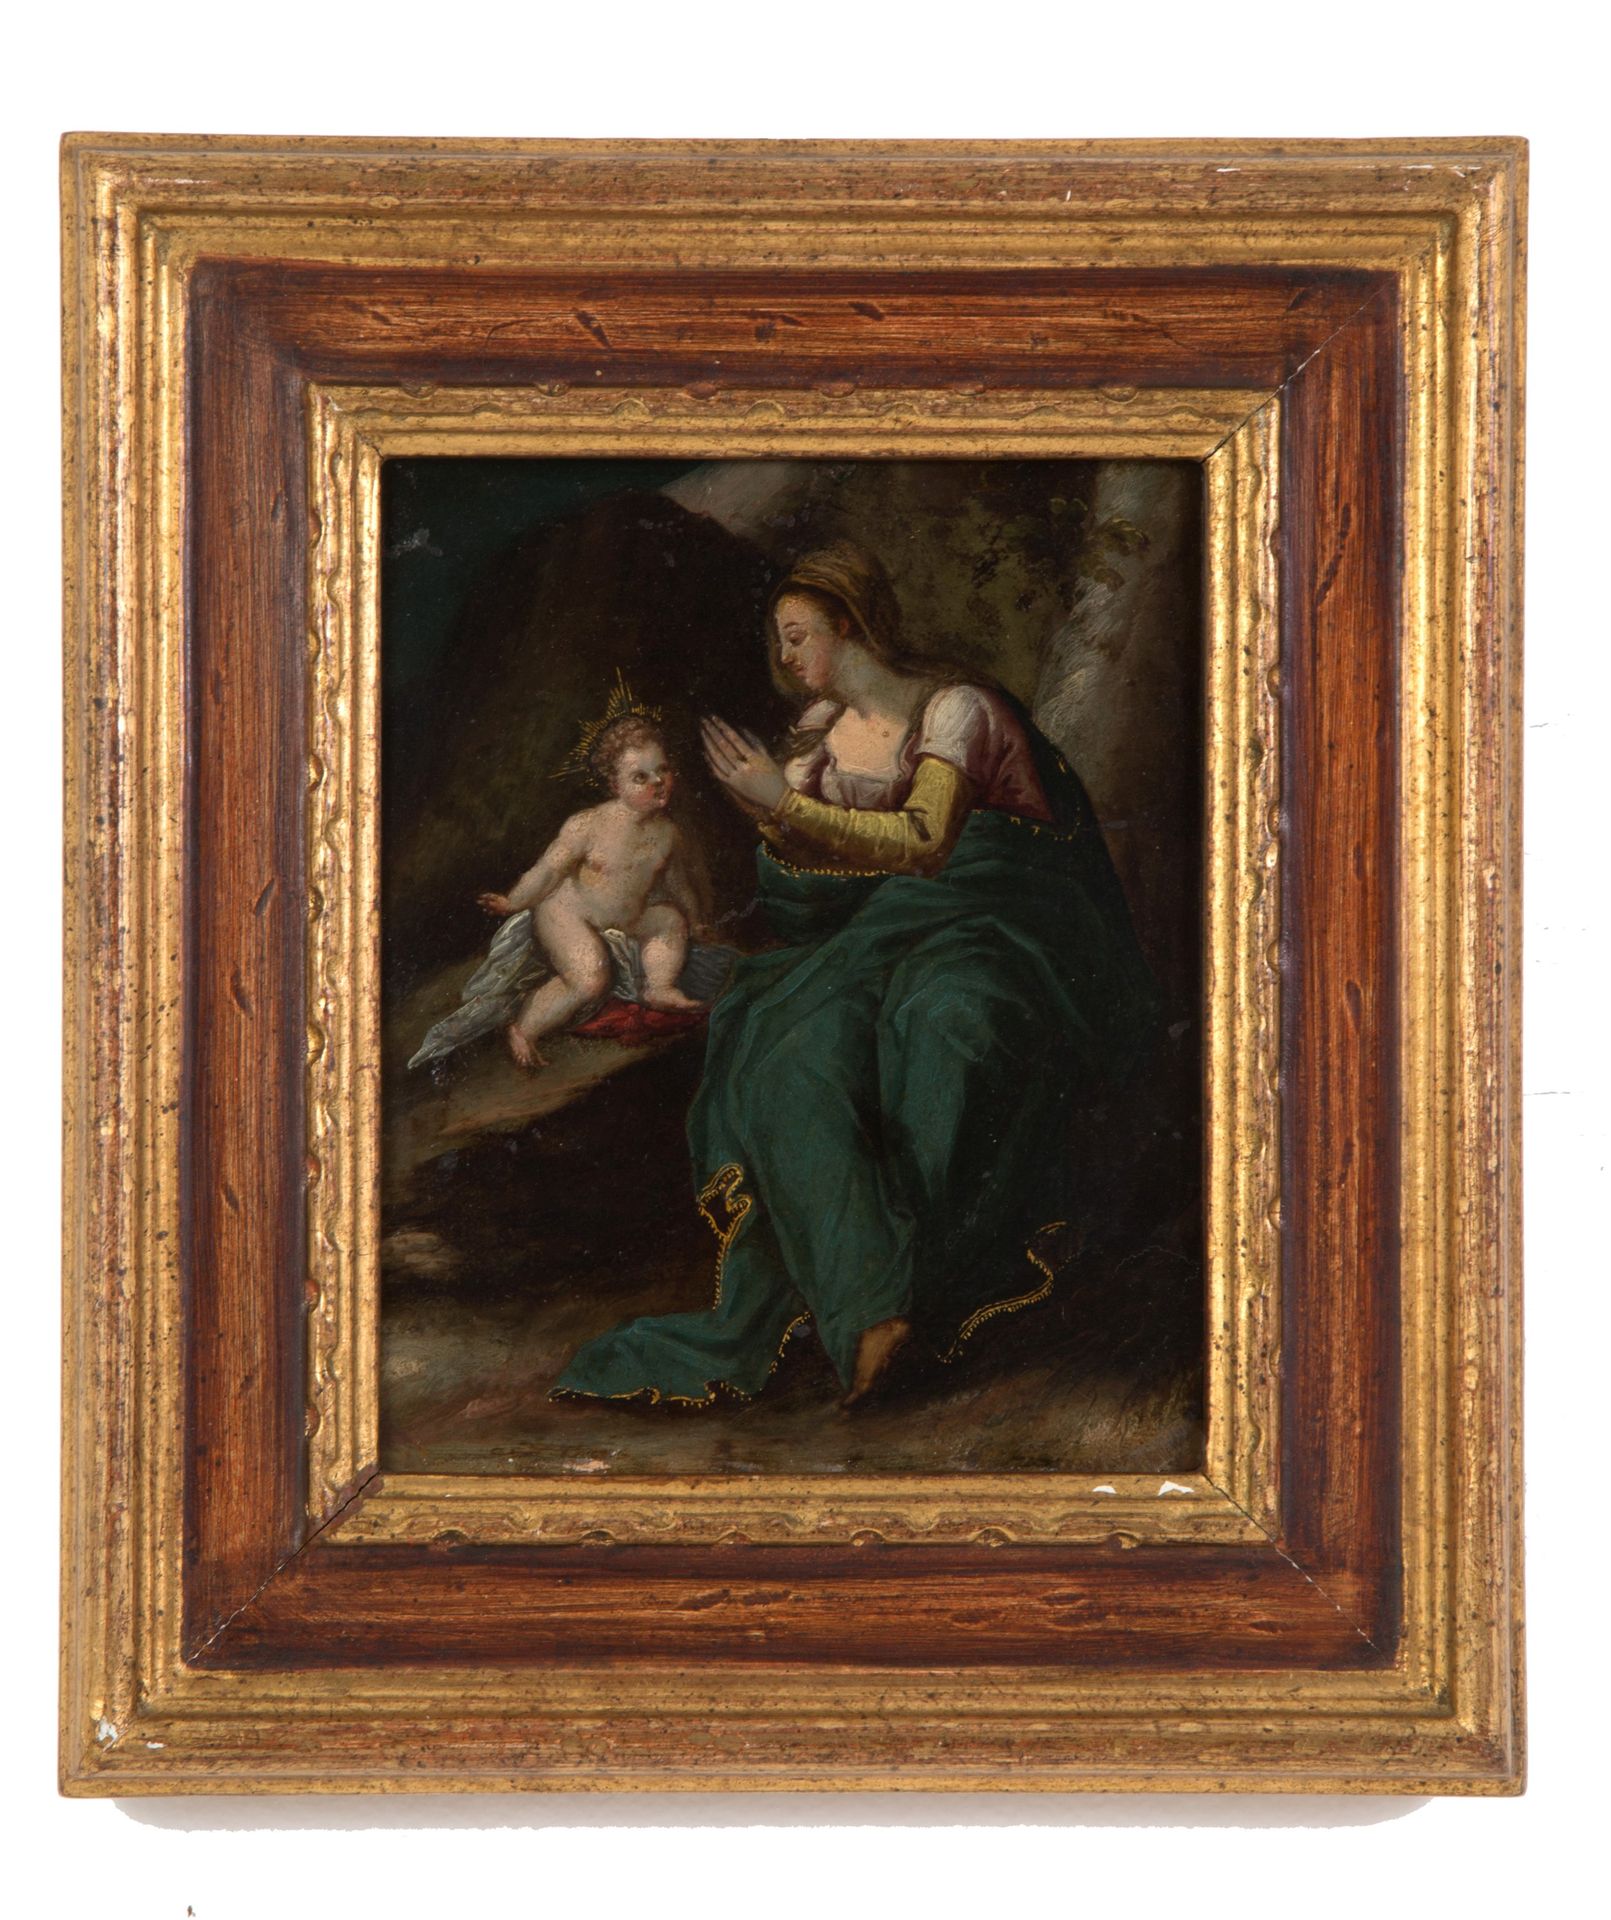 Painting "MADONNA AND JESUS" 铜制油画，描绘了 "玛东娜和耶稣的孩子"。17世纪。在框架内。 17x14.5厘米左右。